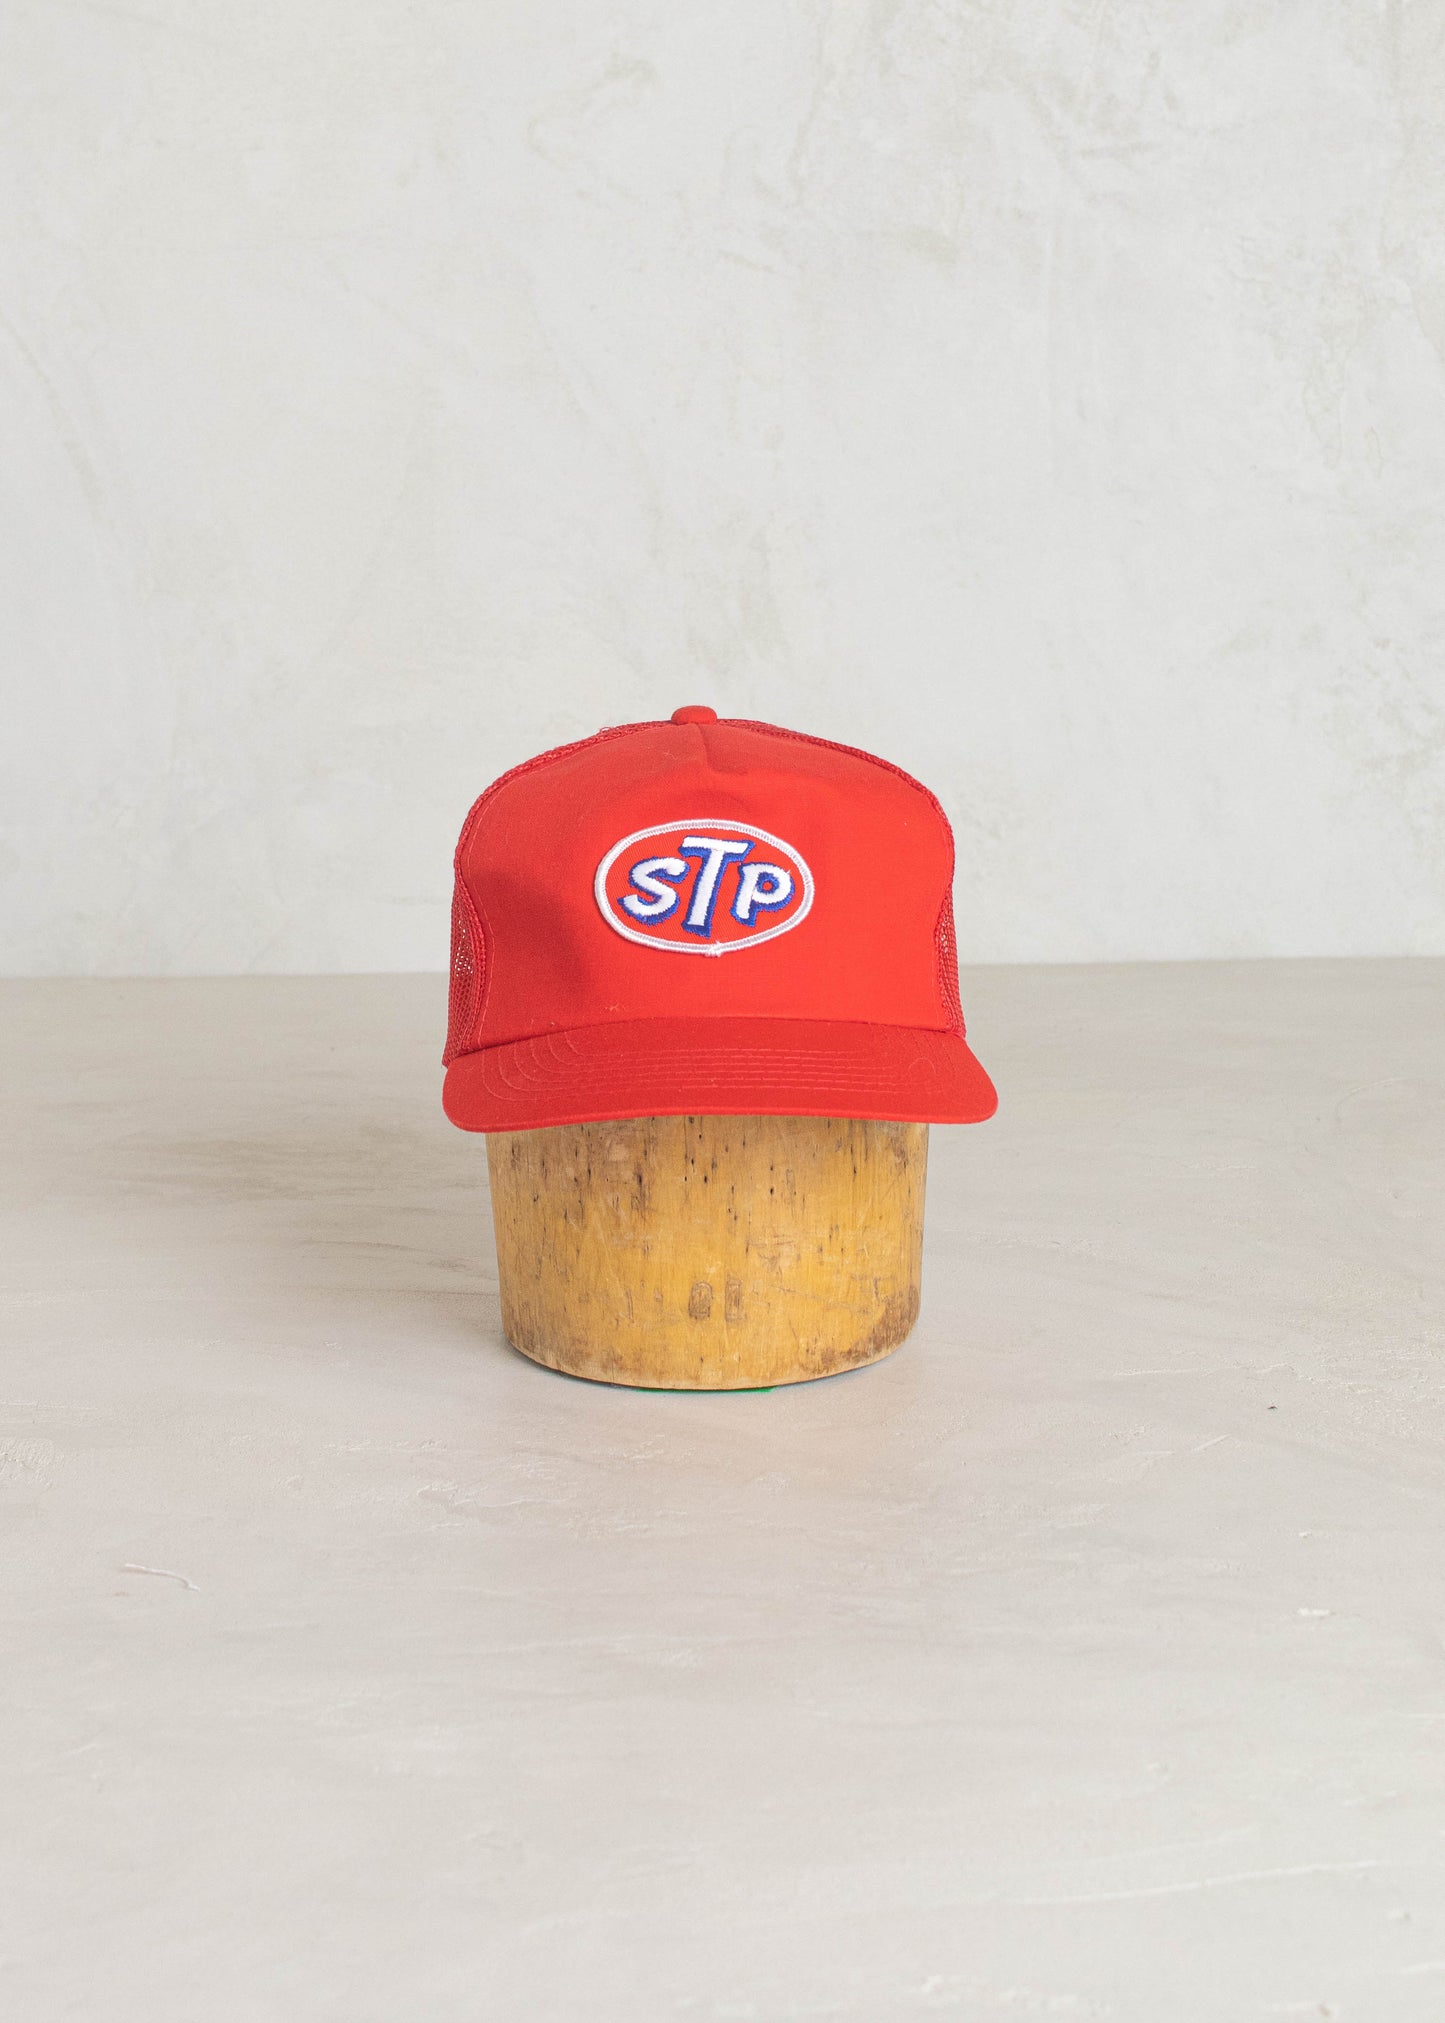 1980s AJM STP Trucker Hat